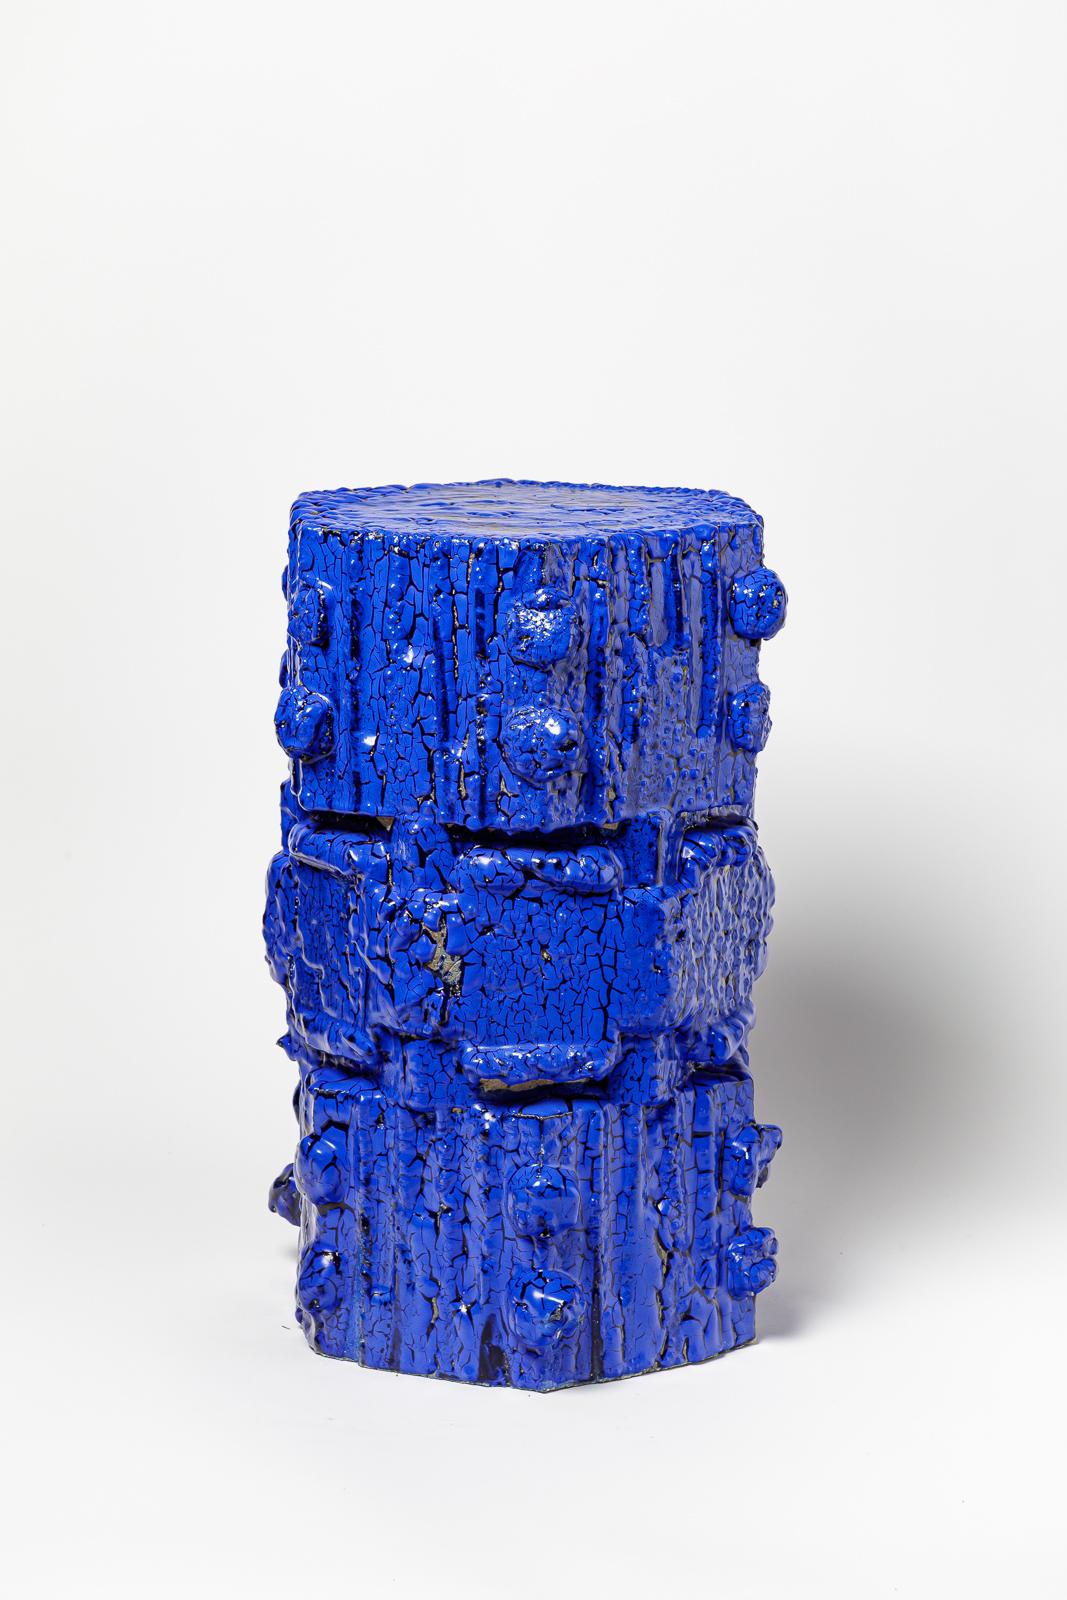 Blue glazed bollène stoneware stool by Jean Ponsart.
Artist monogram at the base. 2023.
H : 20.8’ x 12.6’ x 10.8 inches.